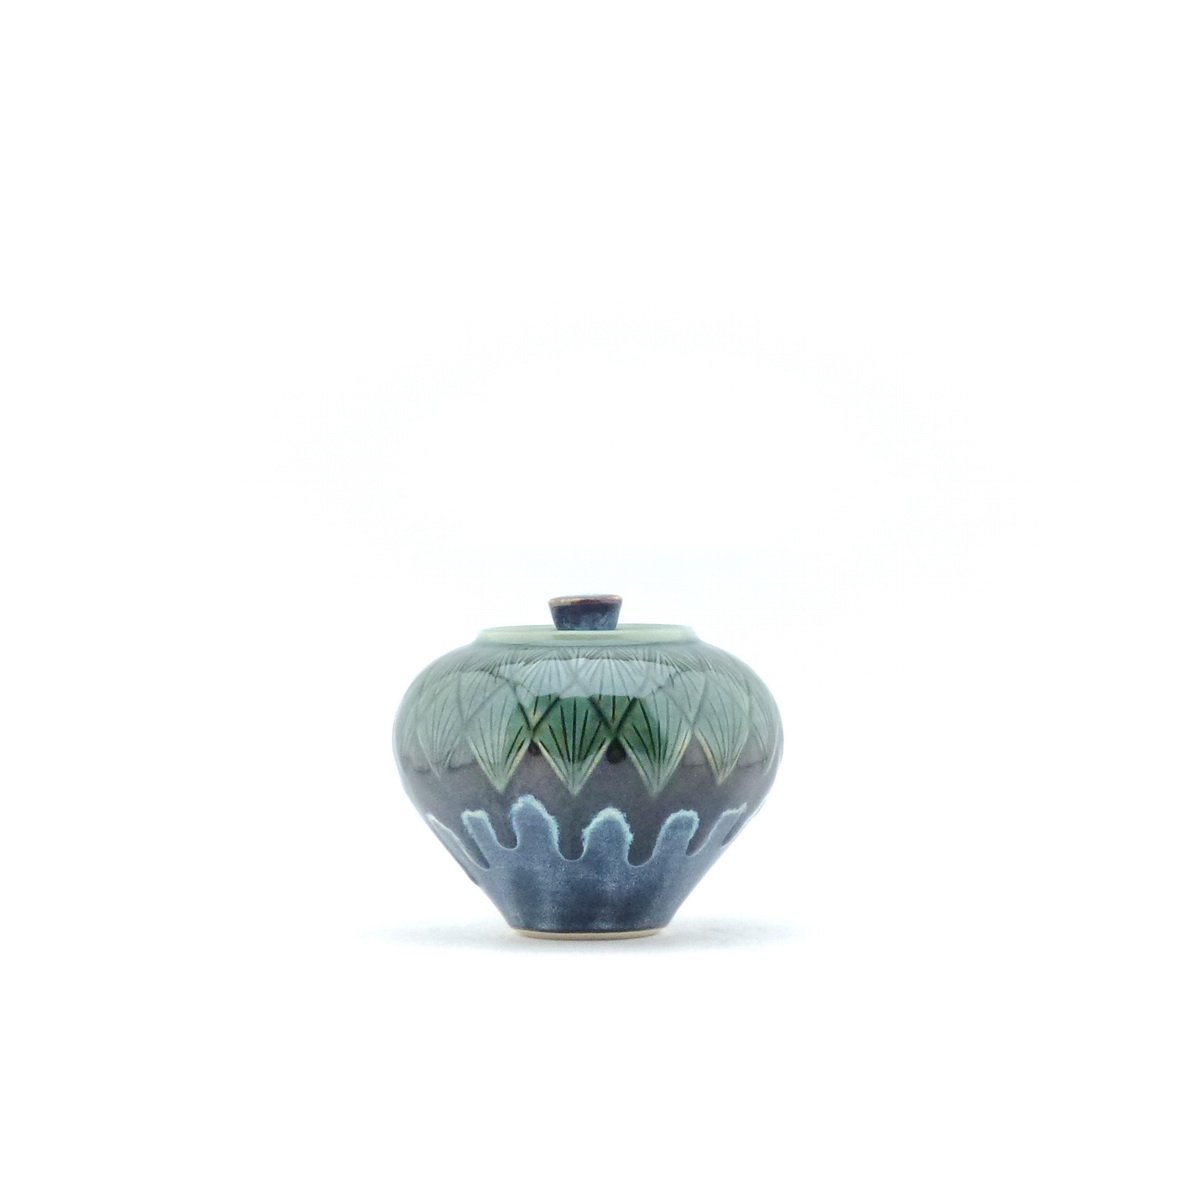 Stoneware lidded jar